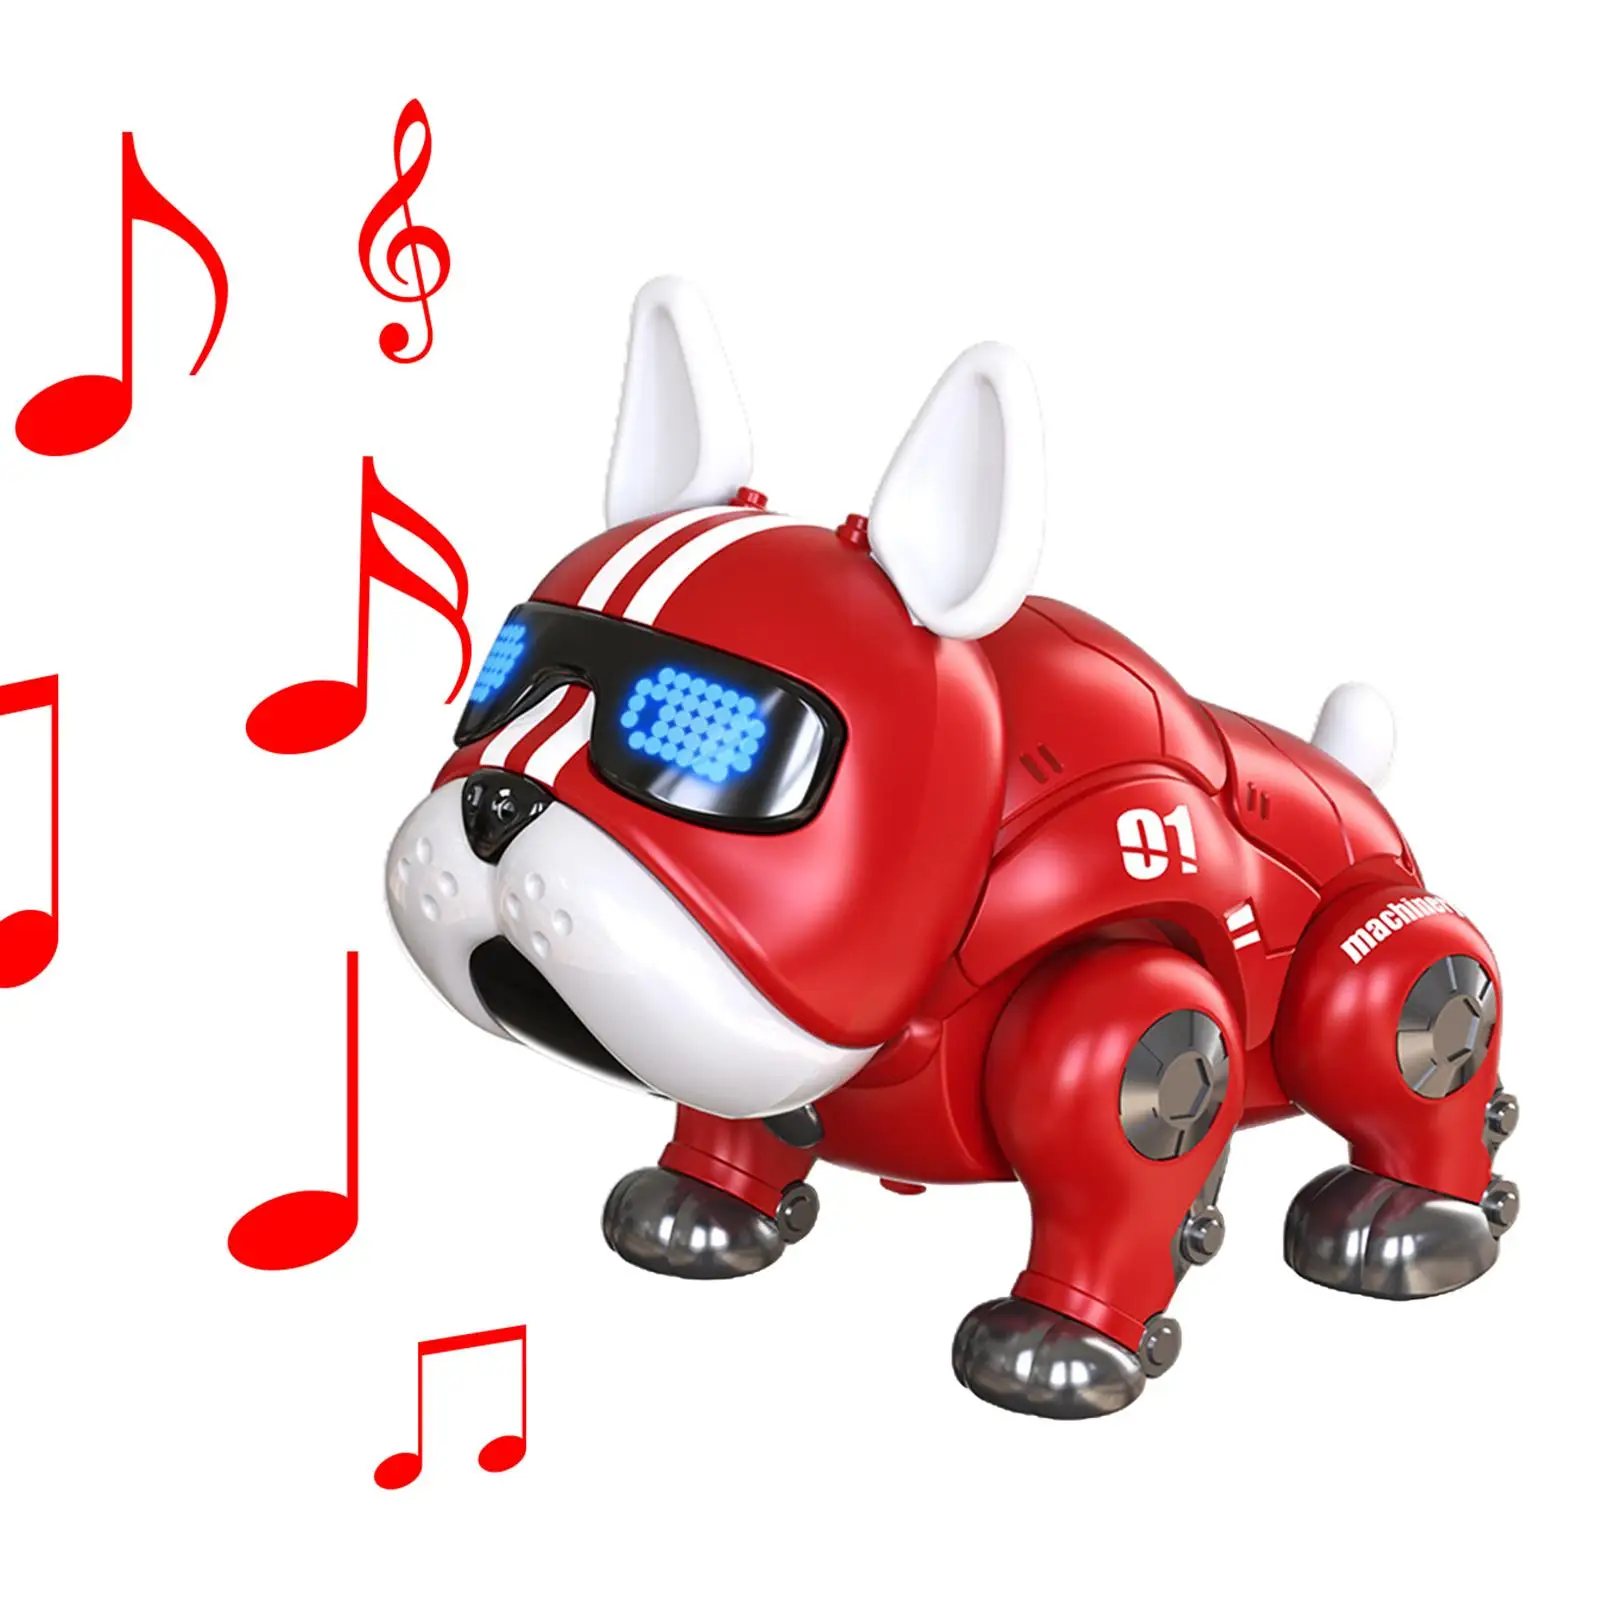 Walking Infant Robot Dog Toys with Light Musical Toys Intelligent Robotic Dog Toy for Toddlers Girls Boys Kids Children